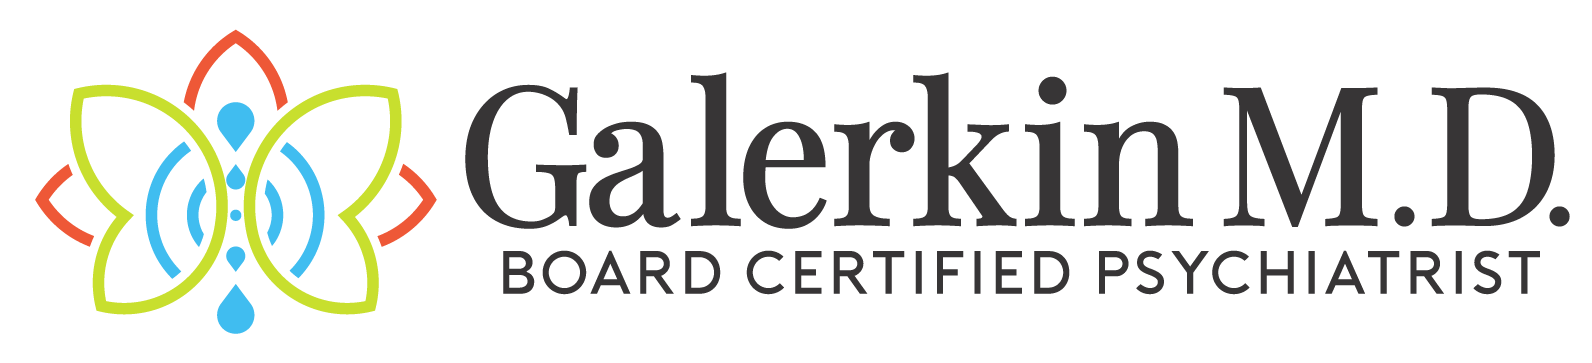 Galerkin M.D. Logo